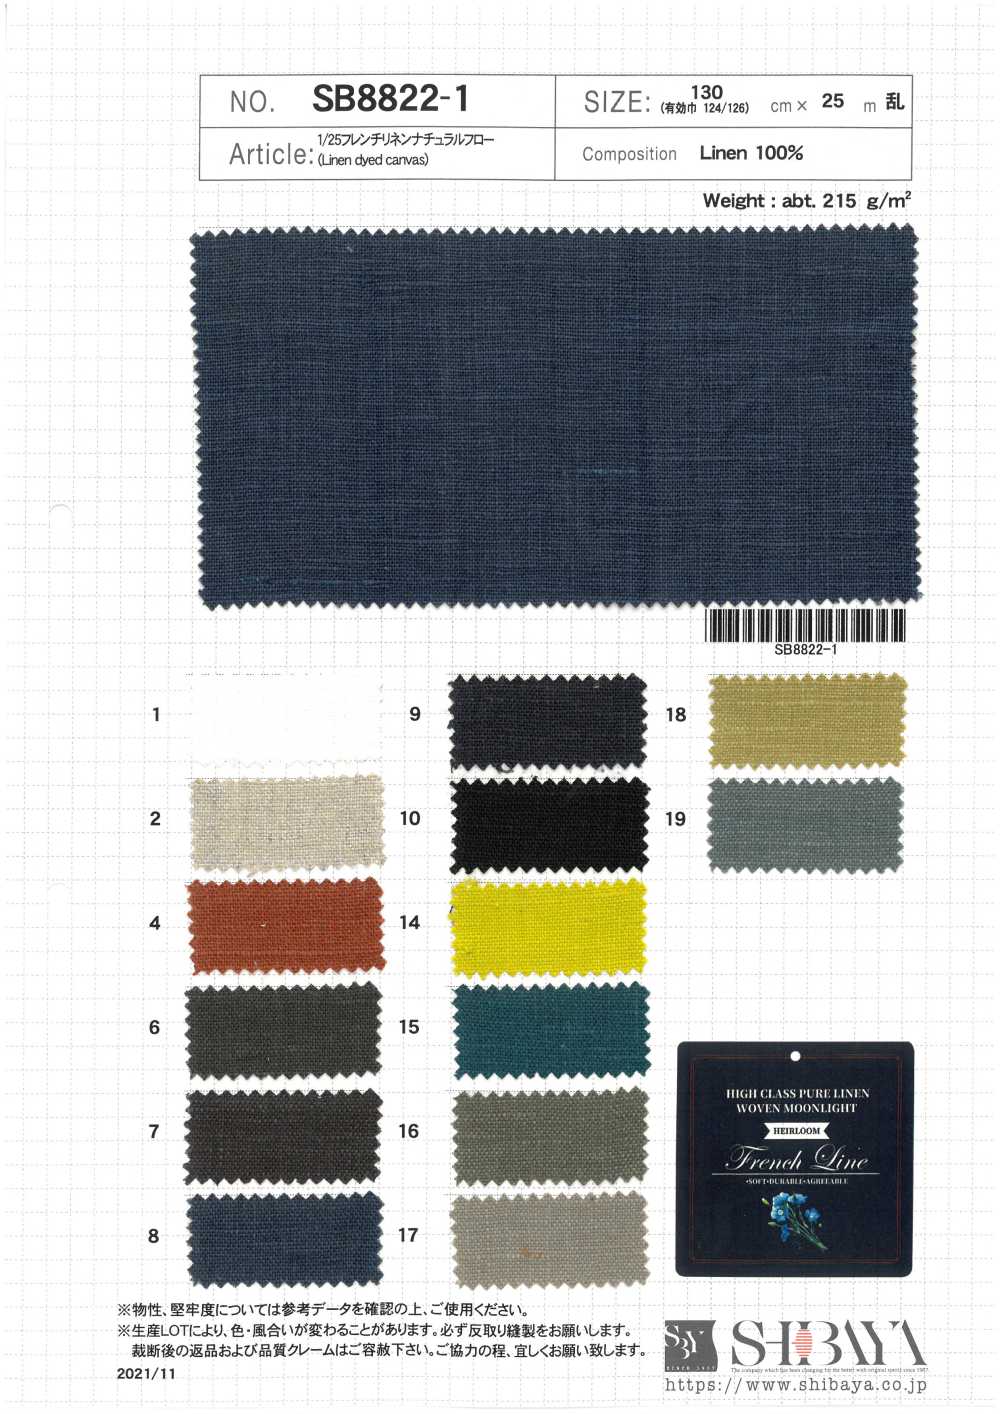 SB8822-1 1/25 French Linen Natural Flow[Textile / Fabric] SHIBAYA